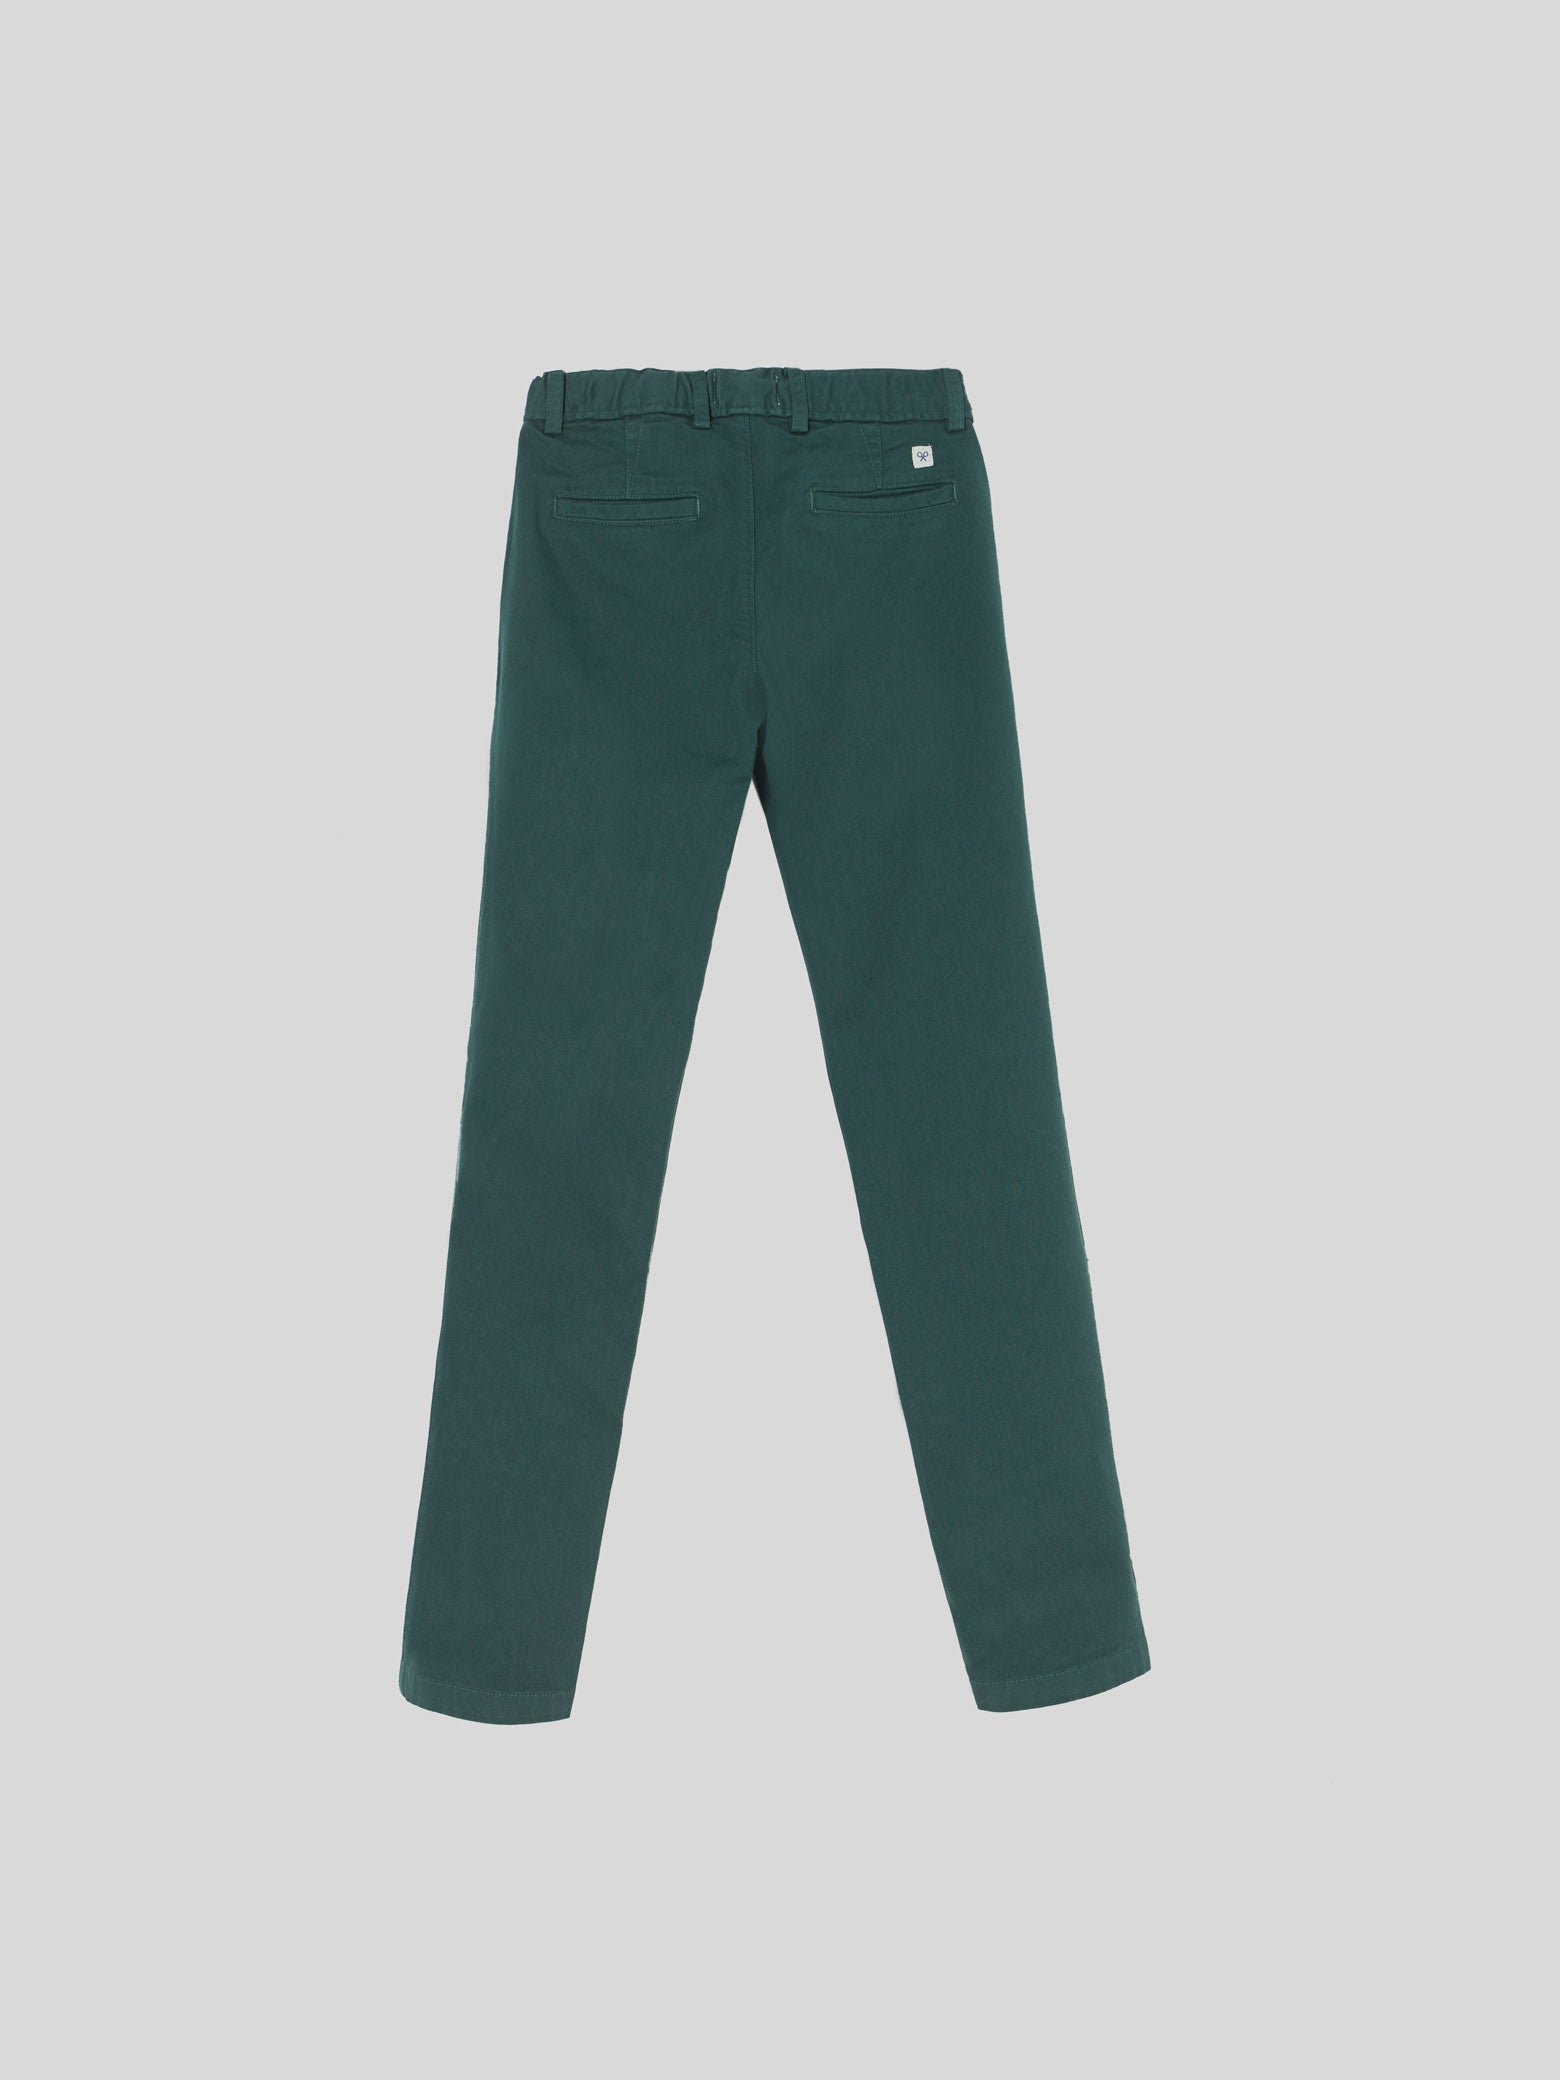 Pantalon chino kids clasico verde